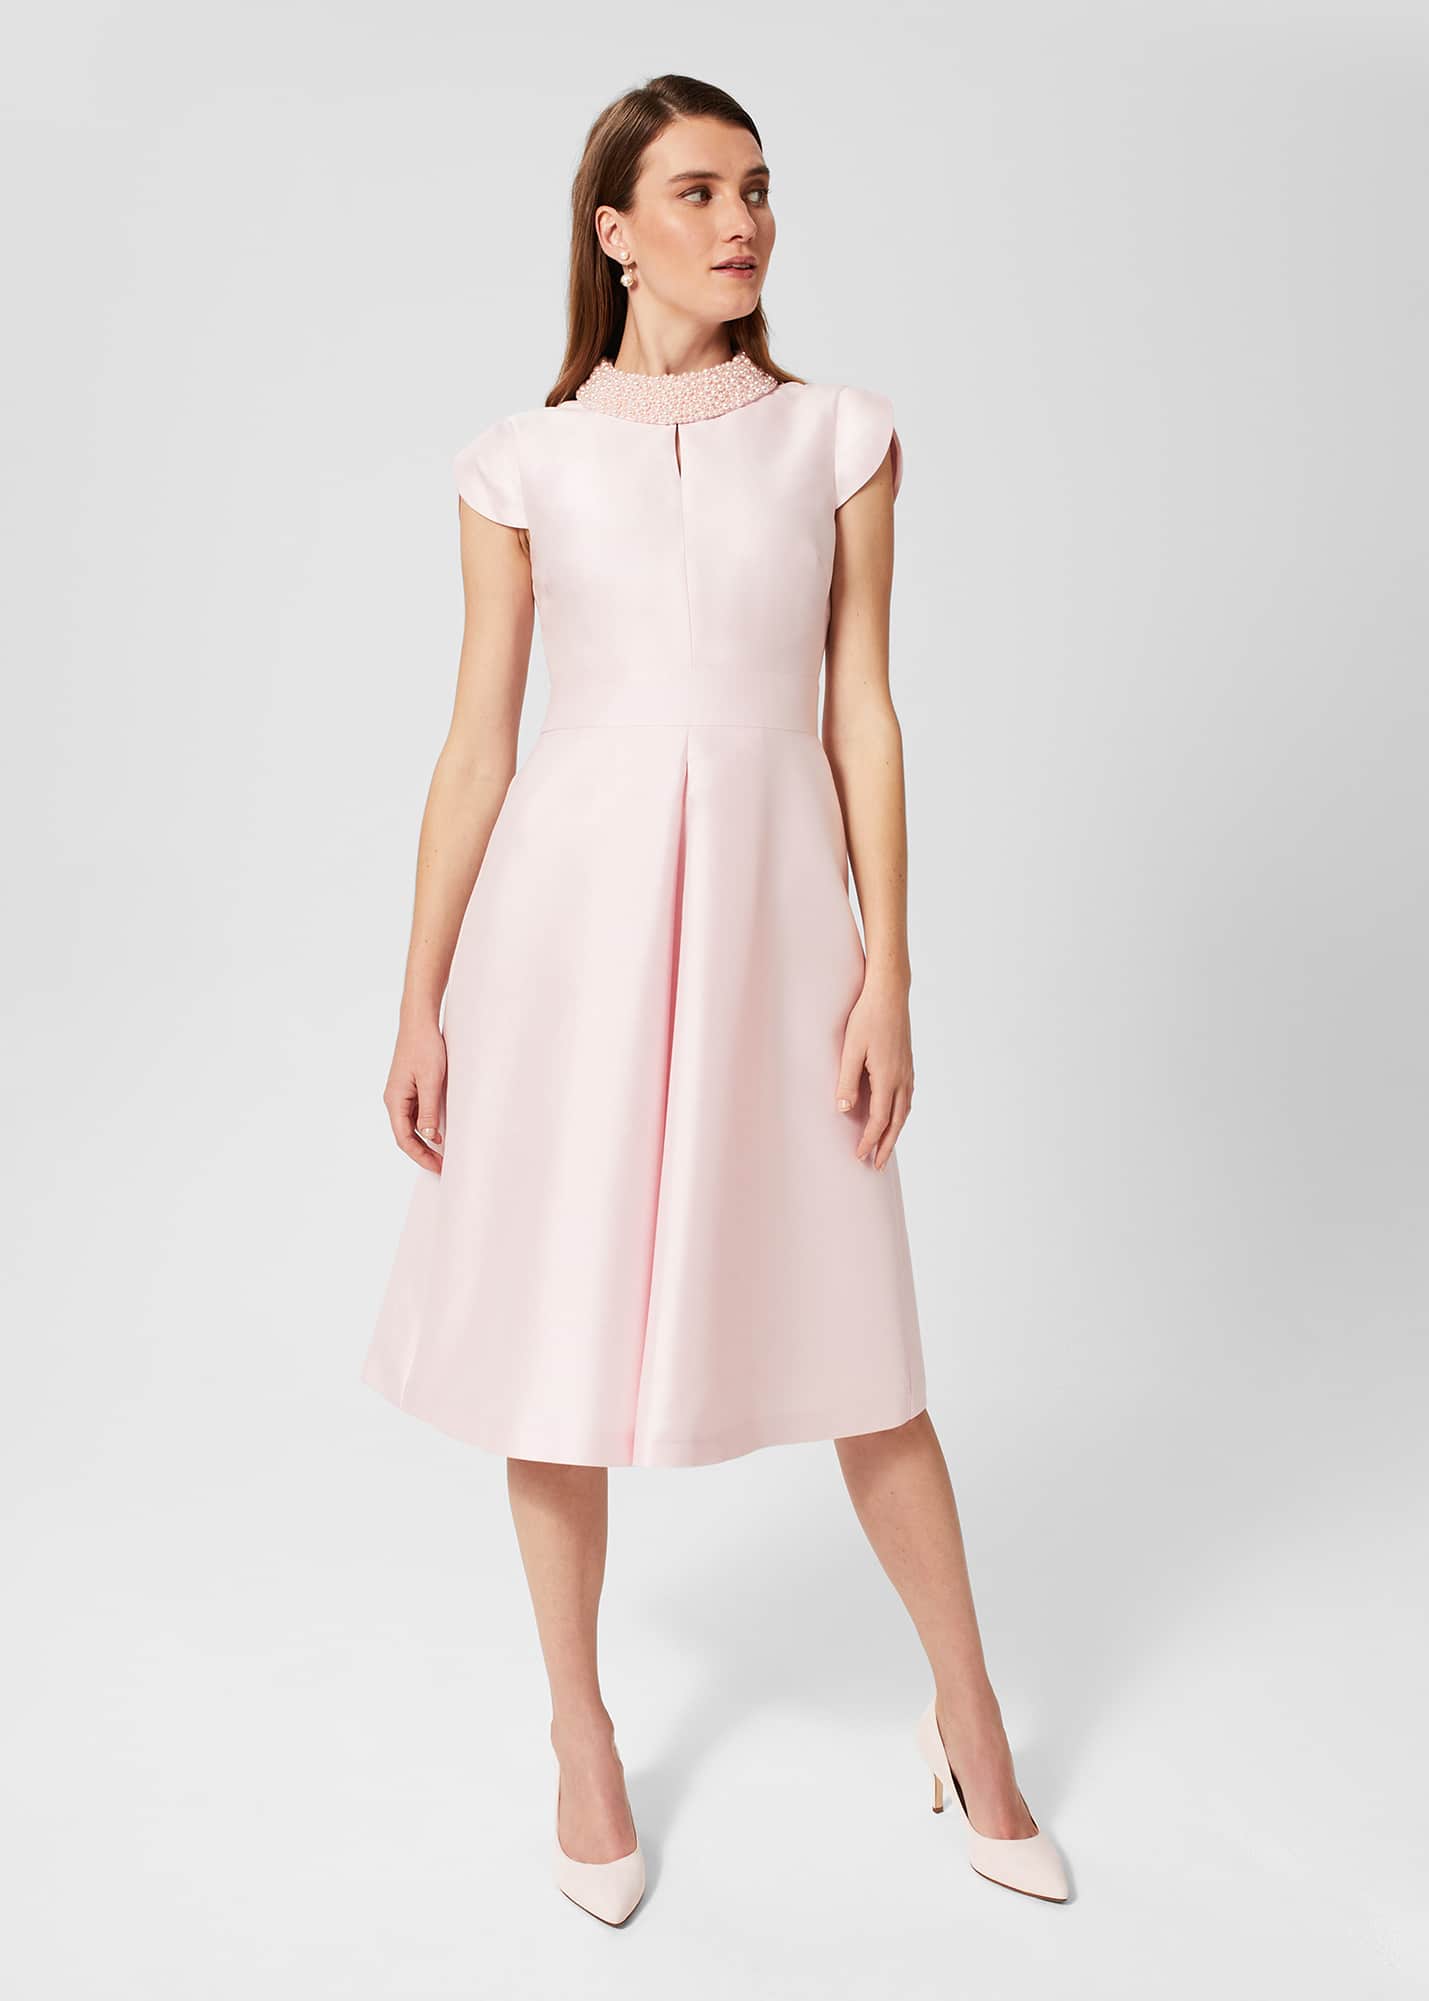 Hobbs Women's Marcella Silk Blend Beaded Dress - Pale Pink